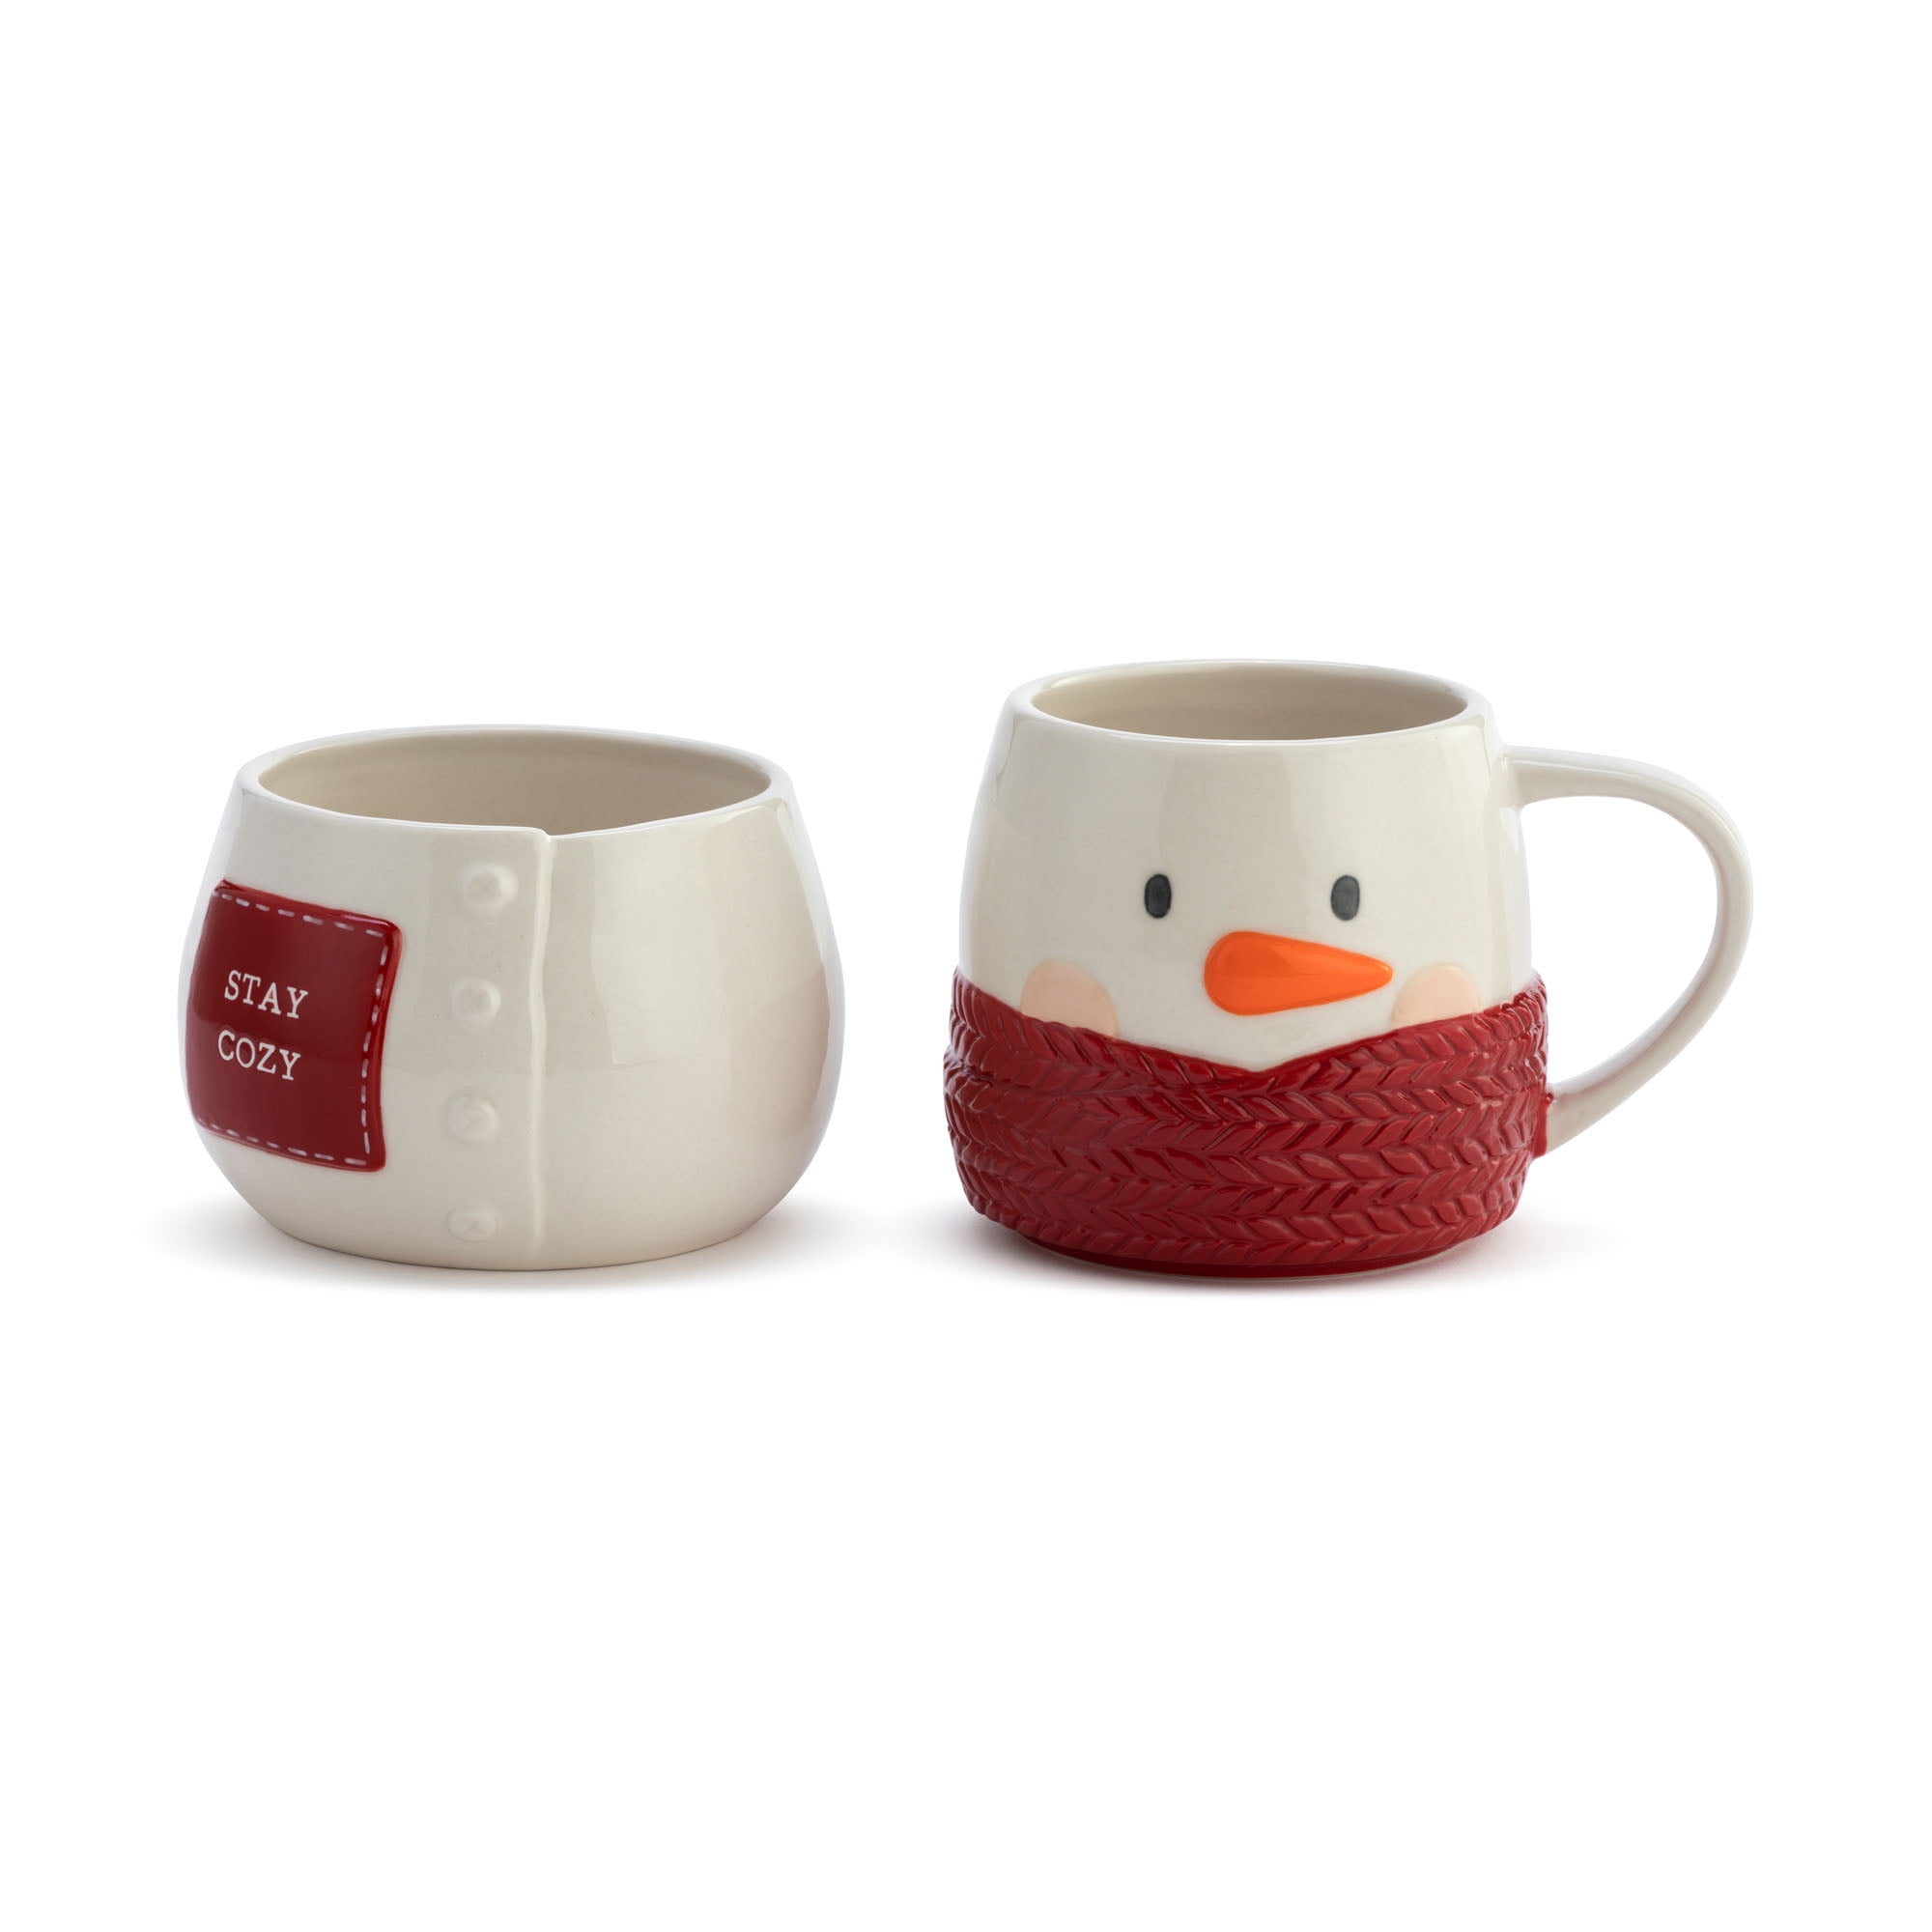 DEMDACO Snowman Stacked Mugs - Set of 2